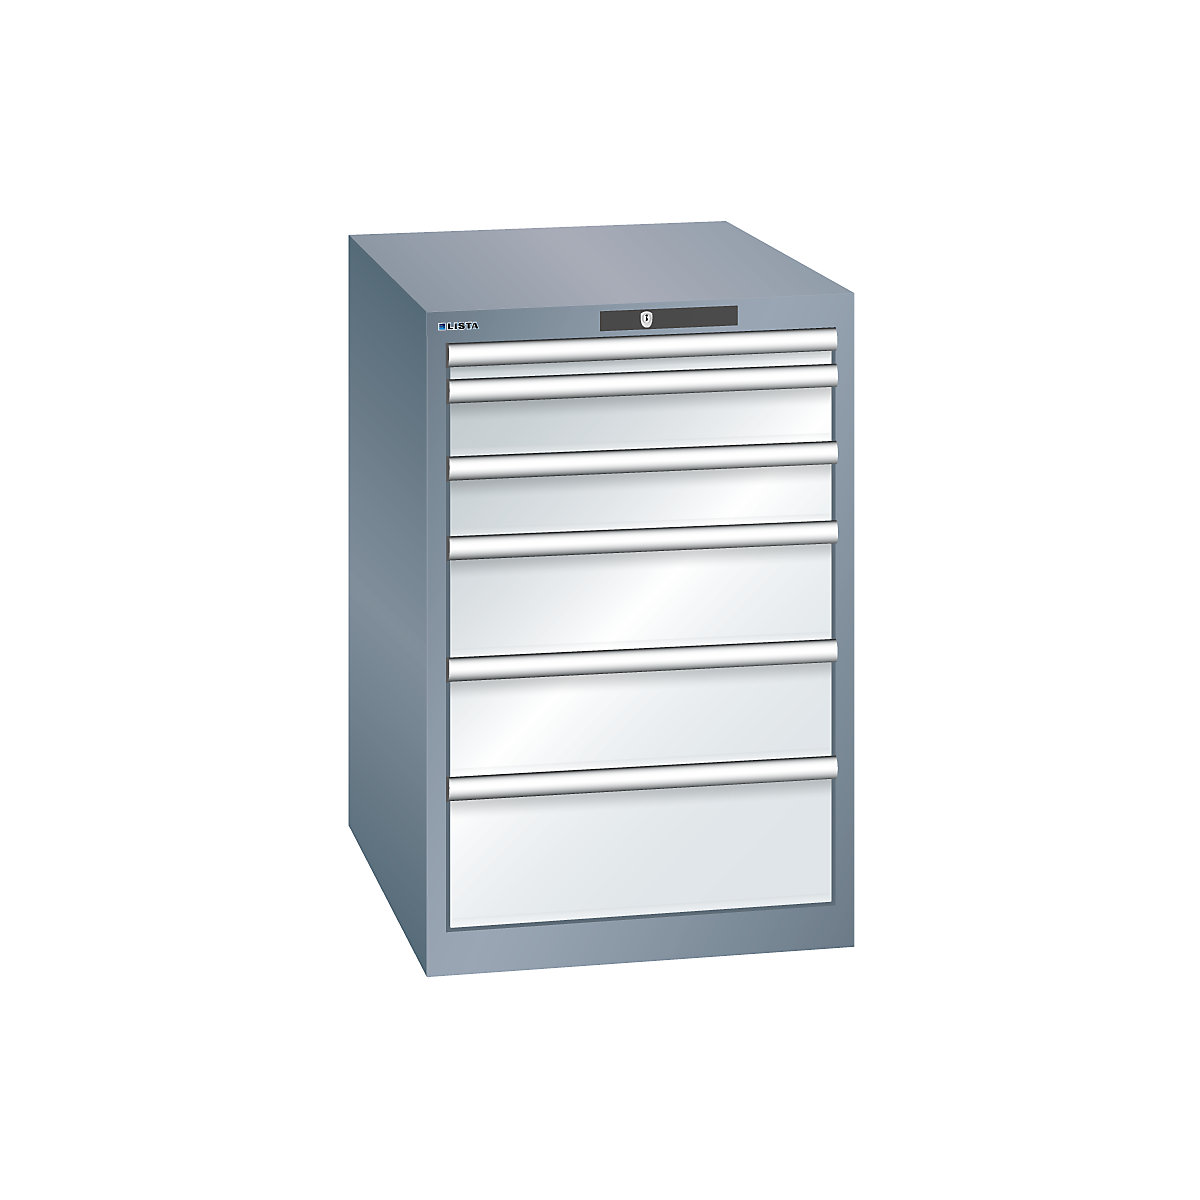 Drawer cupboard, 6 drawers – LISTA, WxDxH 564 x 724 x 850 mm, grey metallic / light grey-1